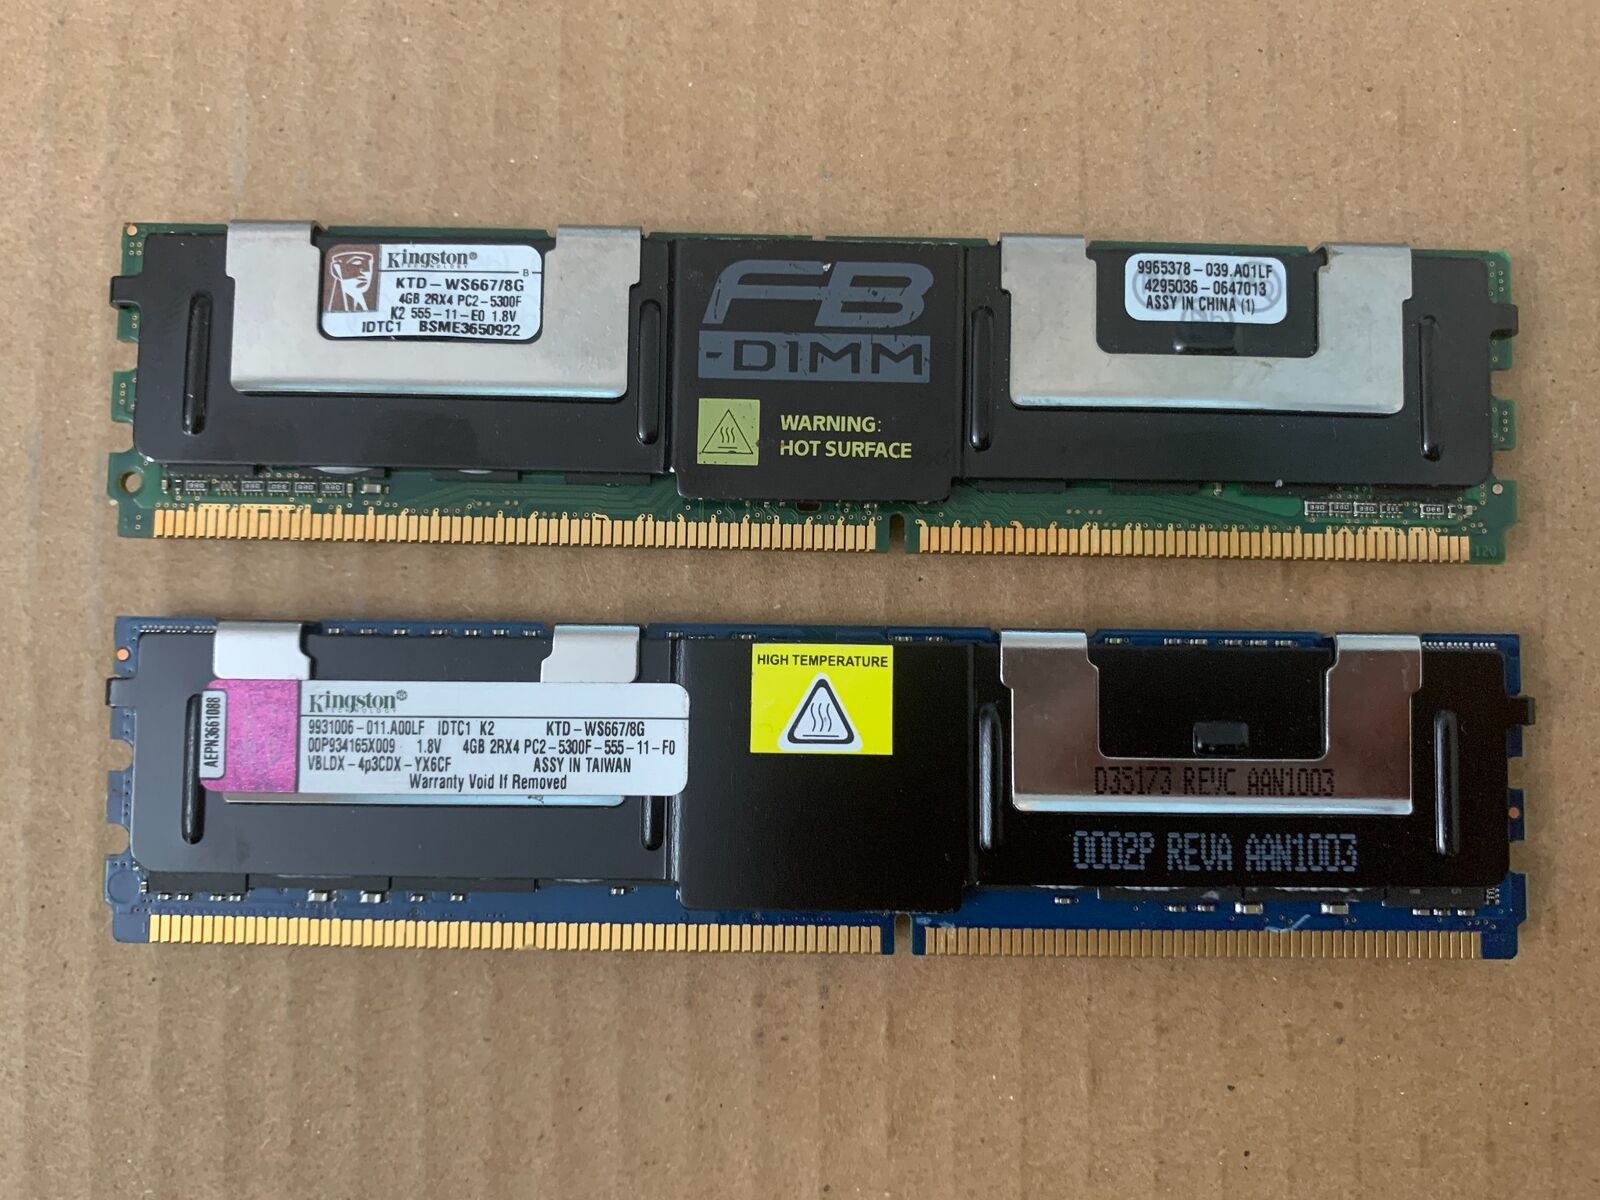 KINGSTON 8GB (2X4GB) KTD-WS667/8G DDR2 667MHZ PC2-5300F SERVER MEMORY  G6-4(4)